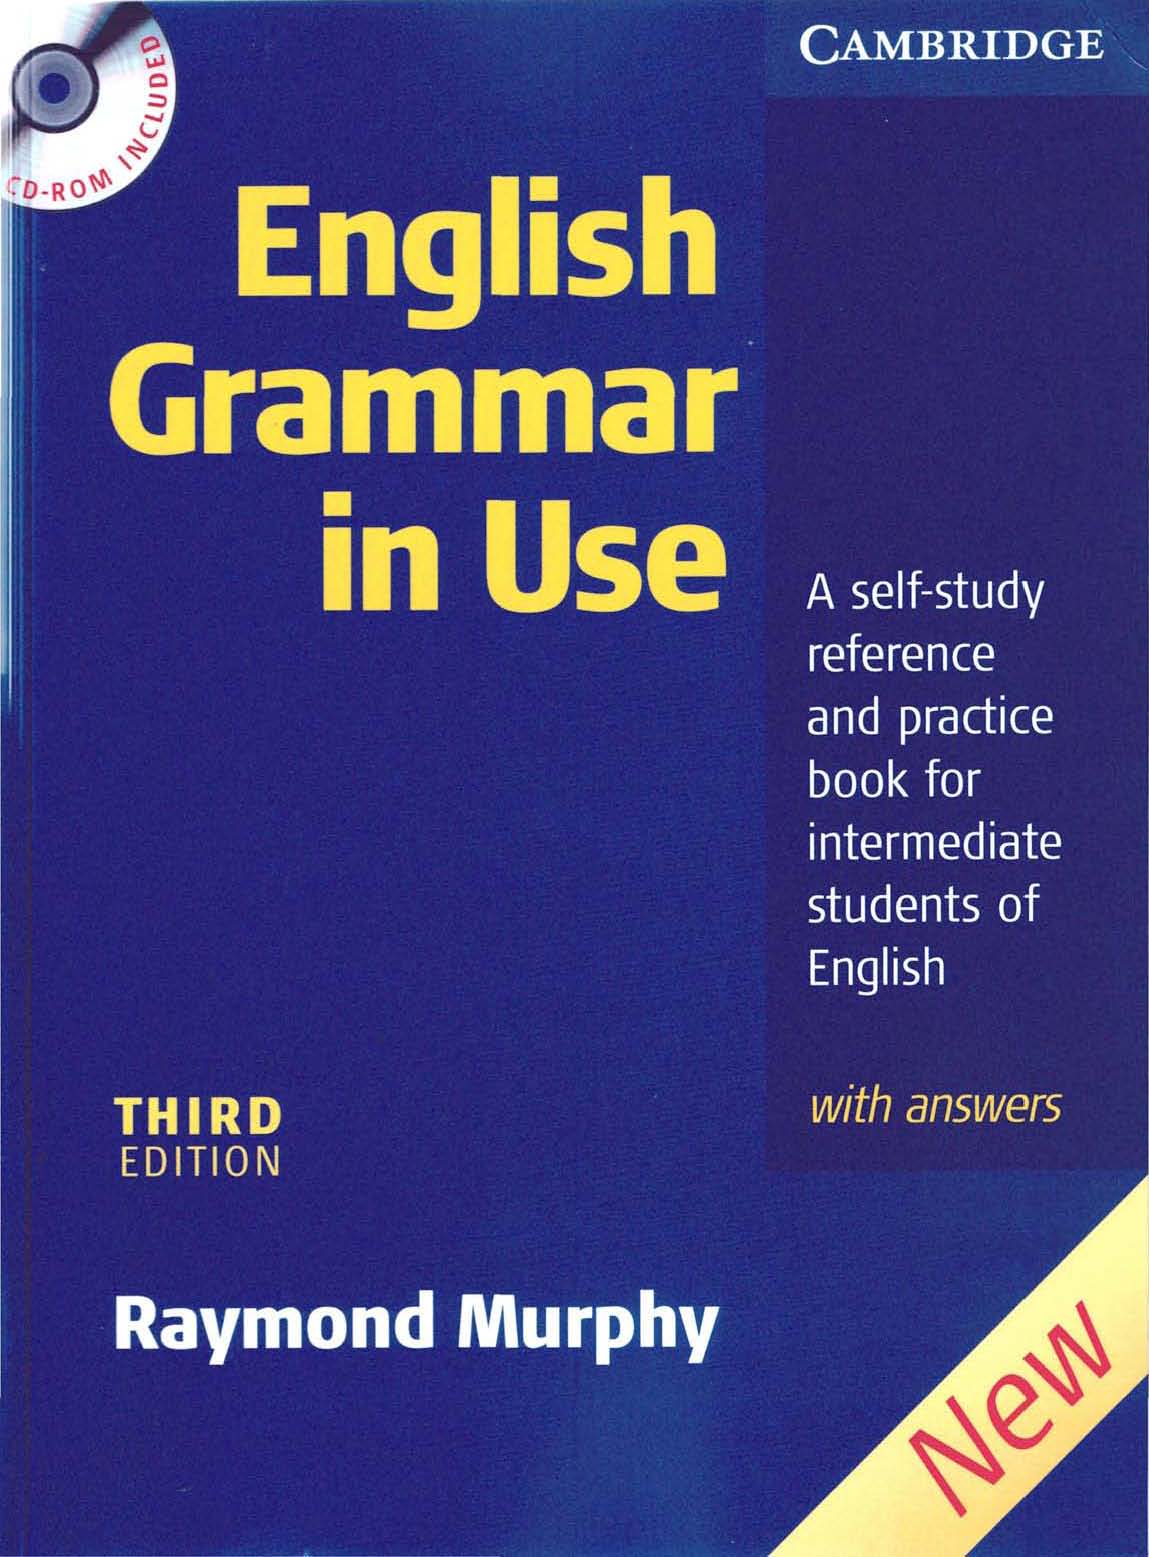 english grammar today cambridge download